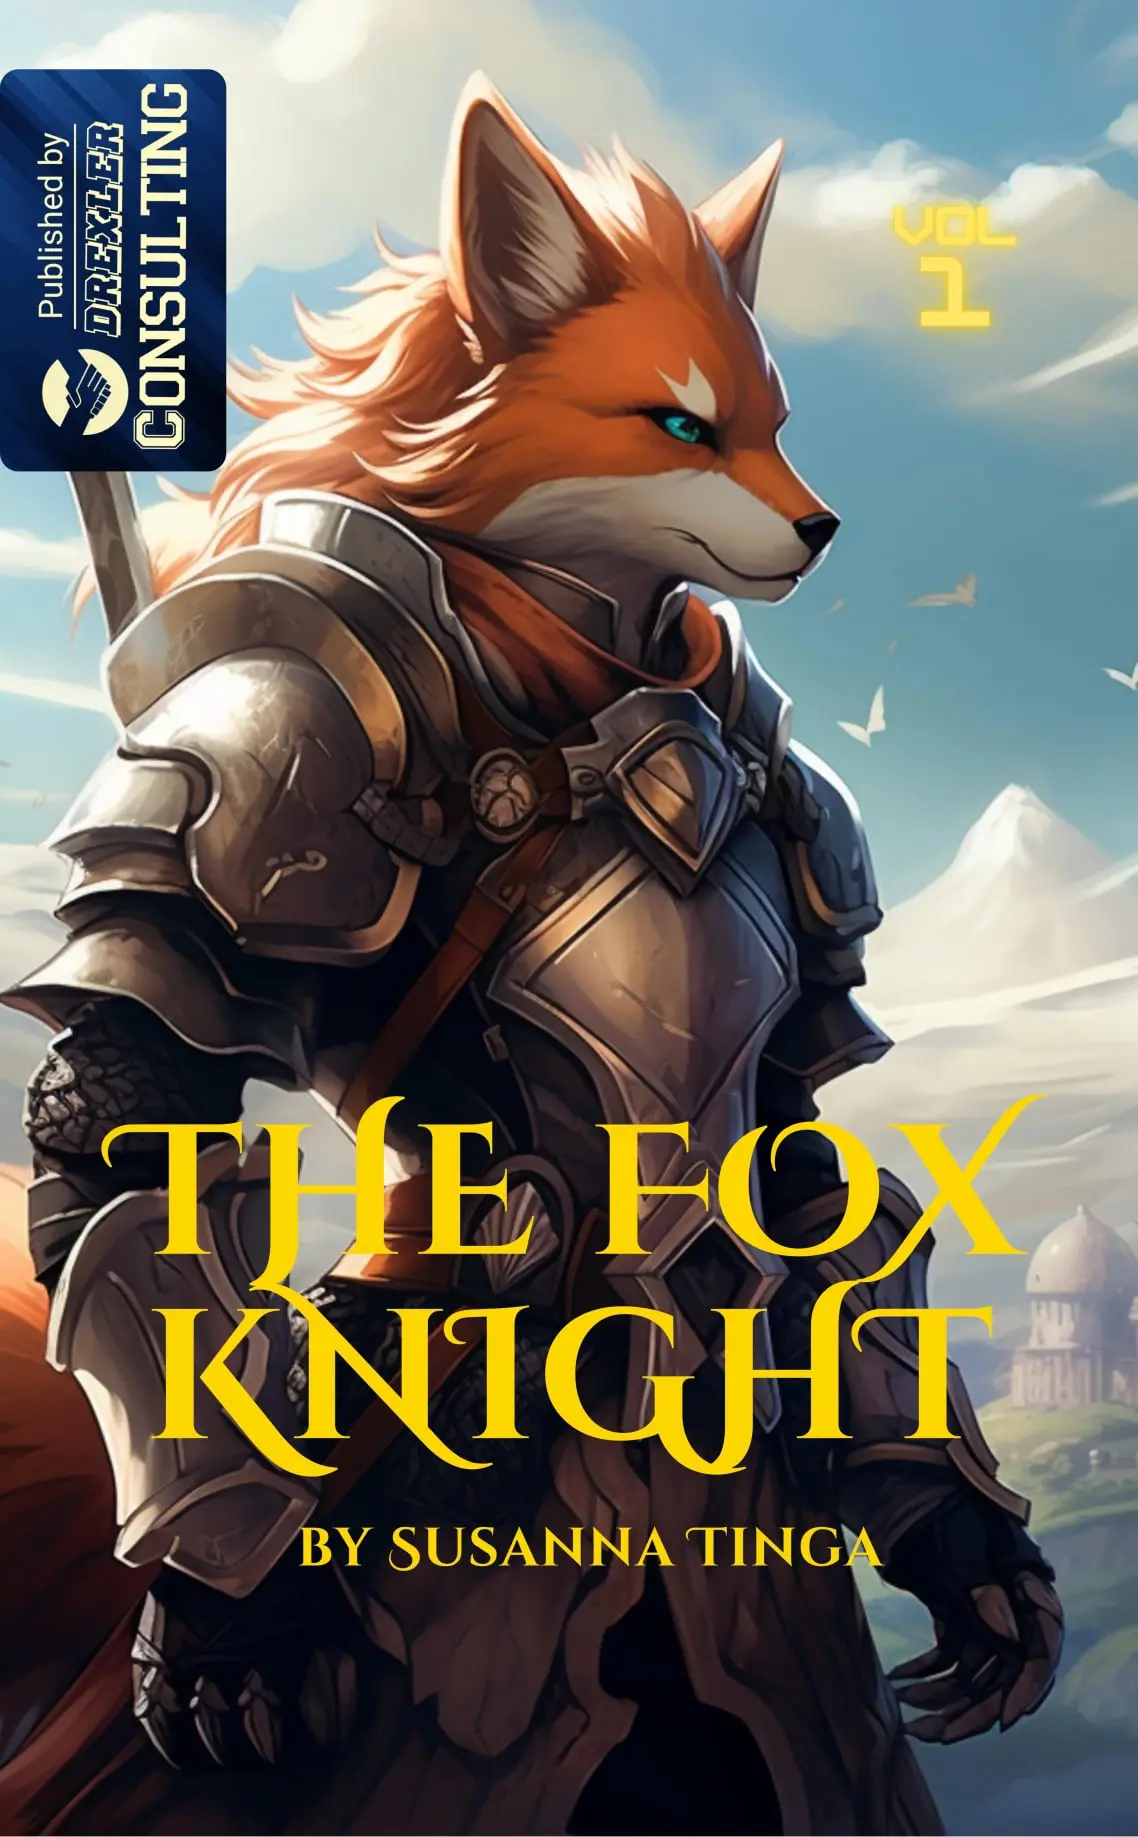 The Fox Night by Susanna Tinga, a red Fox knight Adventure